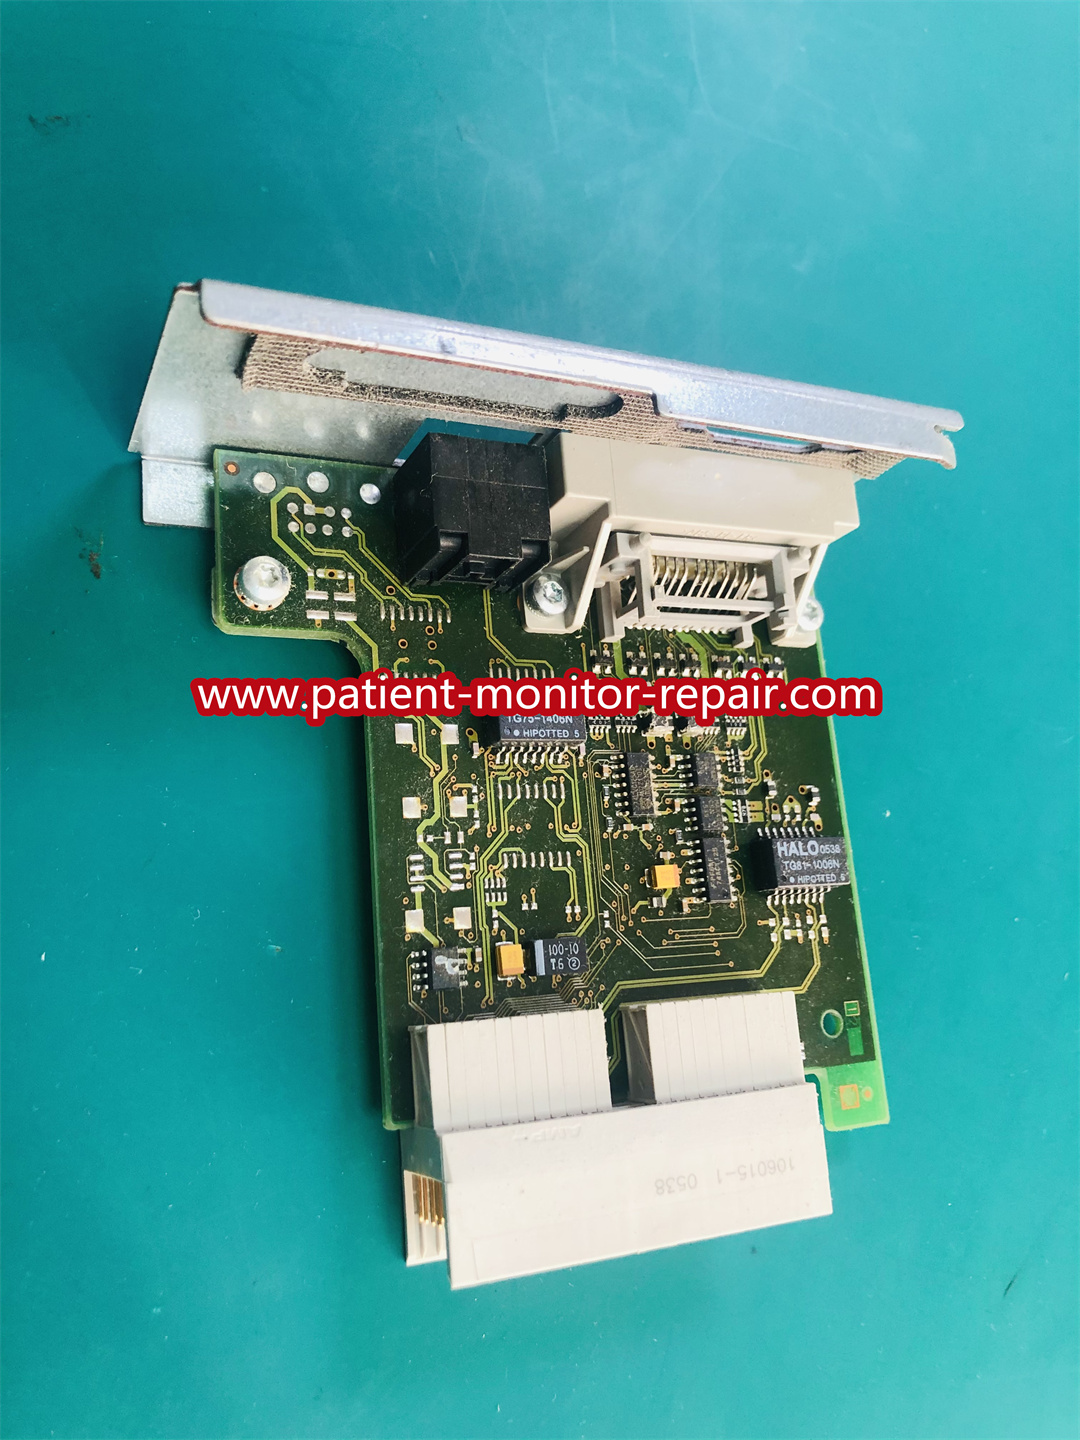 [LAN Card]PHILIPS IntelliVue MP70 patient monitor LAN network card Price|Refurbished|Used